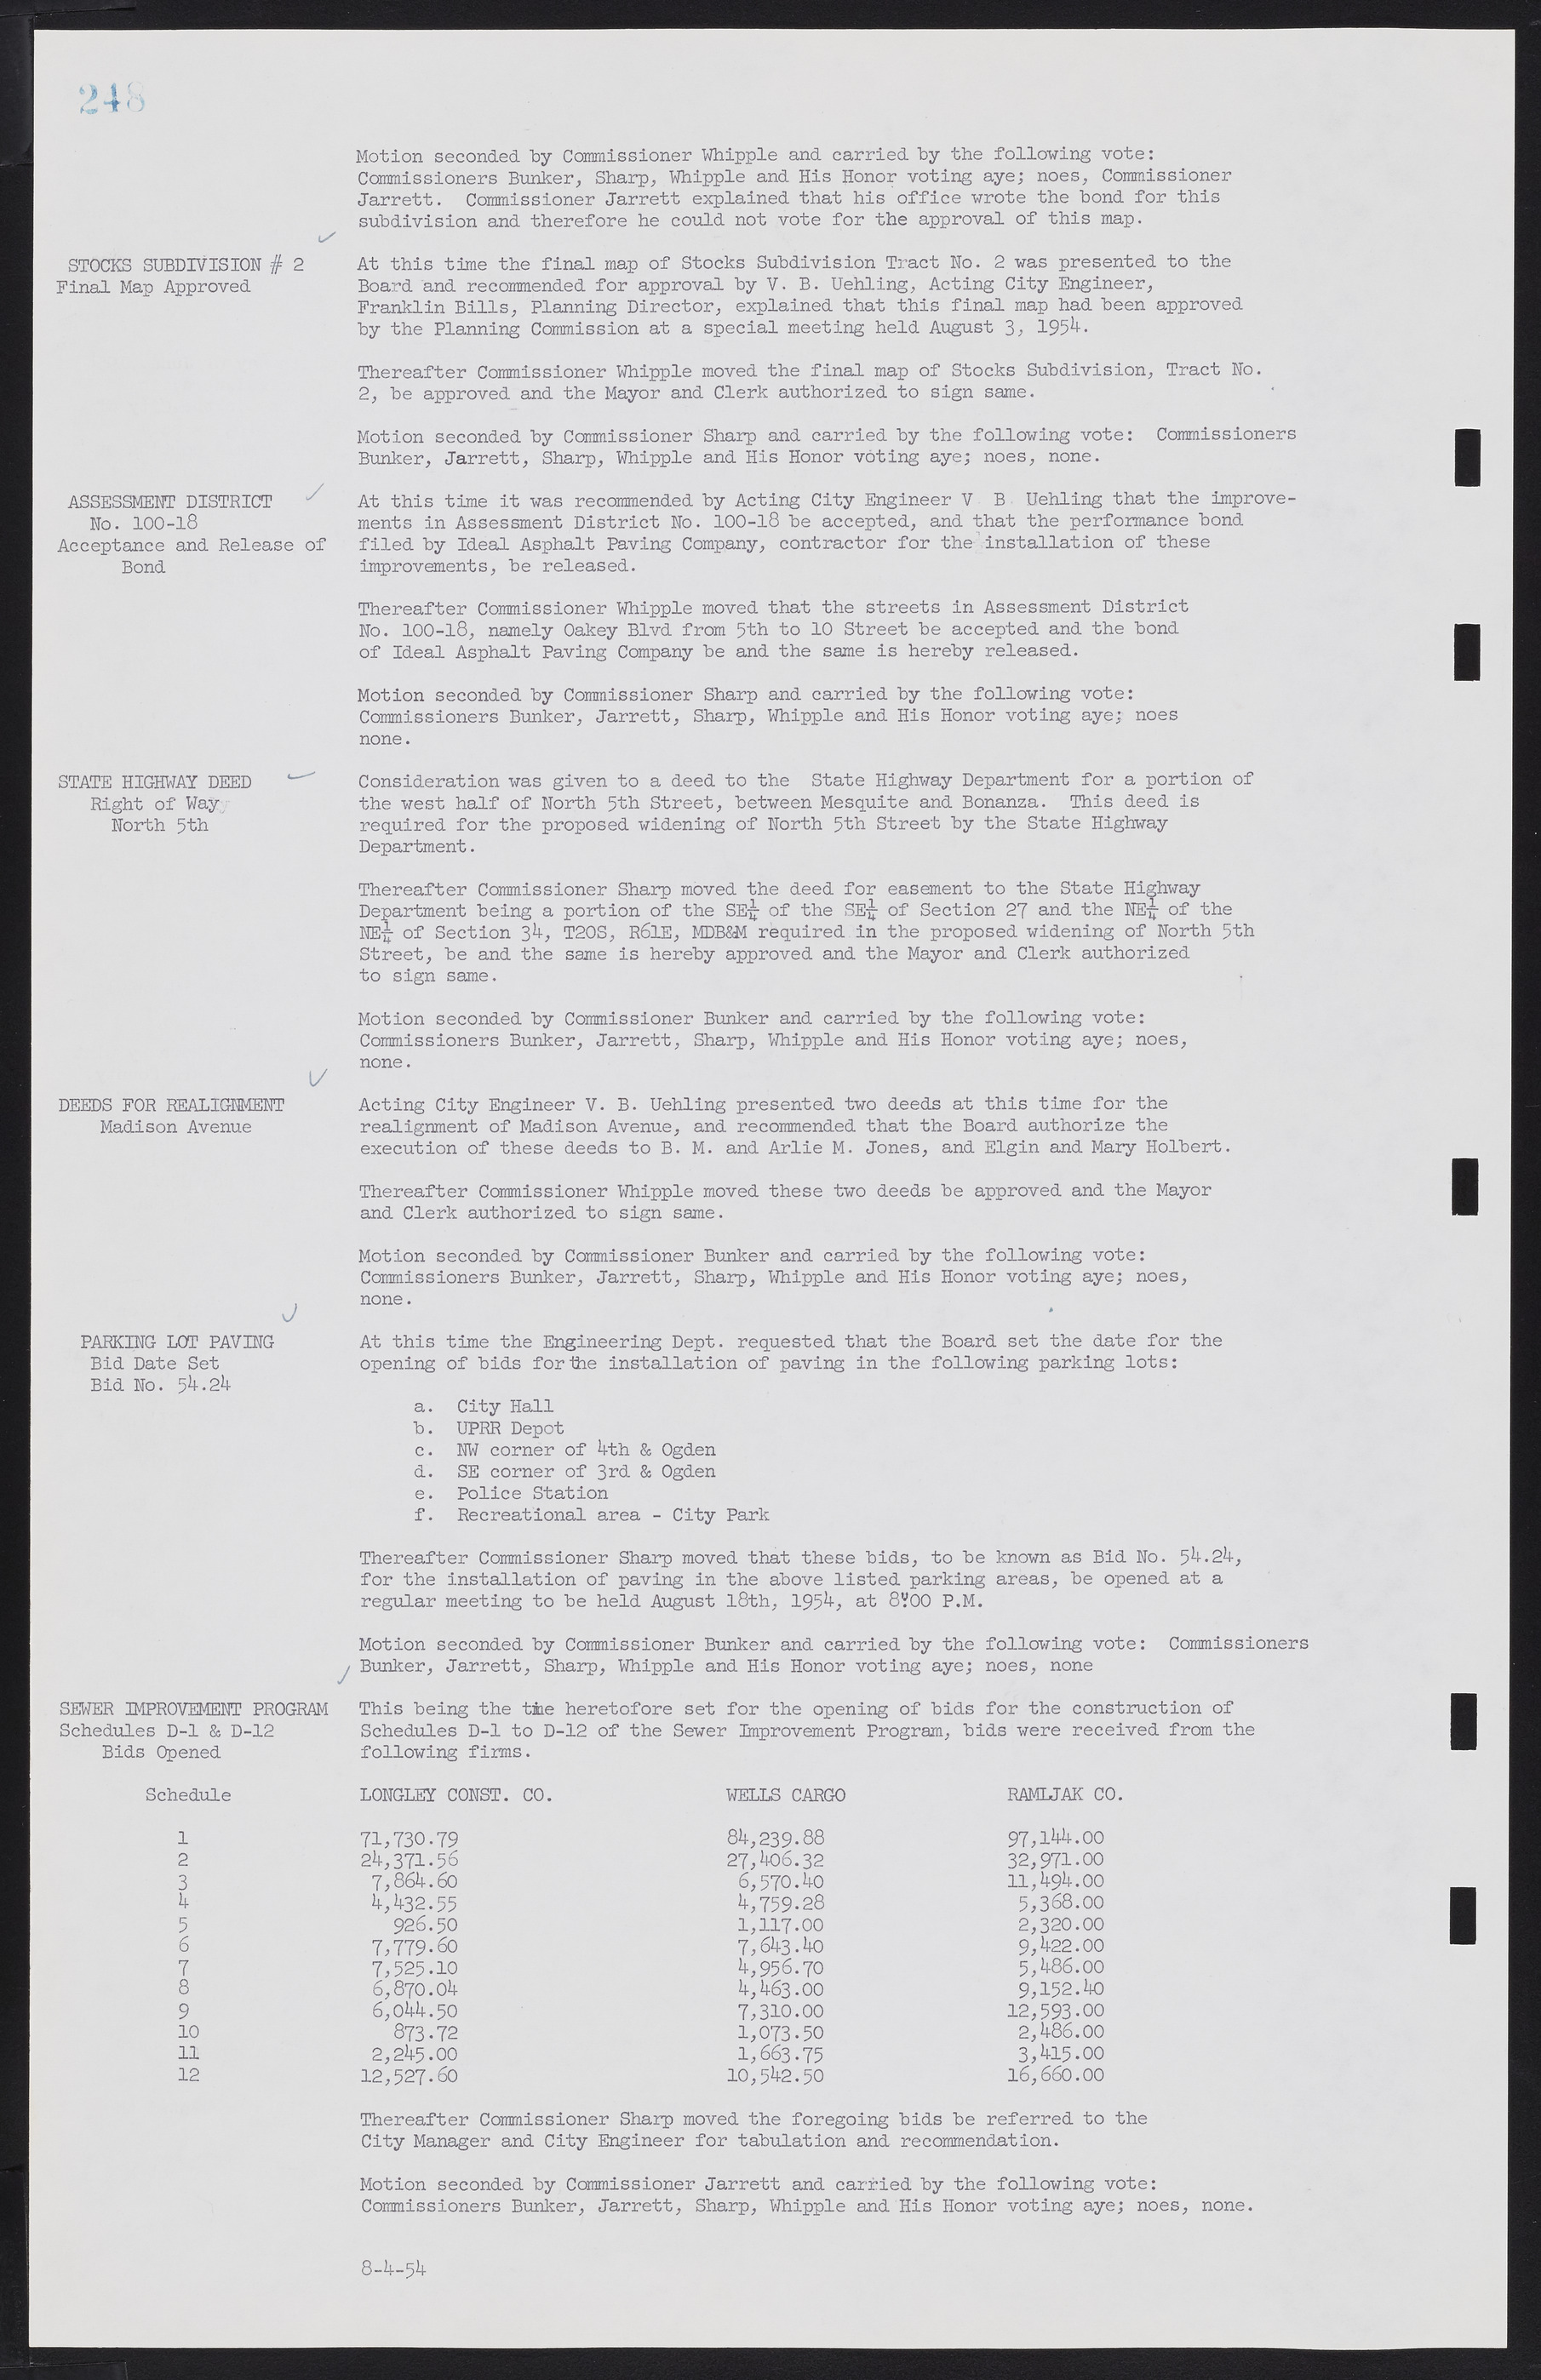 Las Vegas City Commission Minutes, February 17, 1954 to September 21, 1955, lvc000009-254